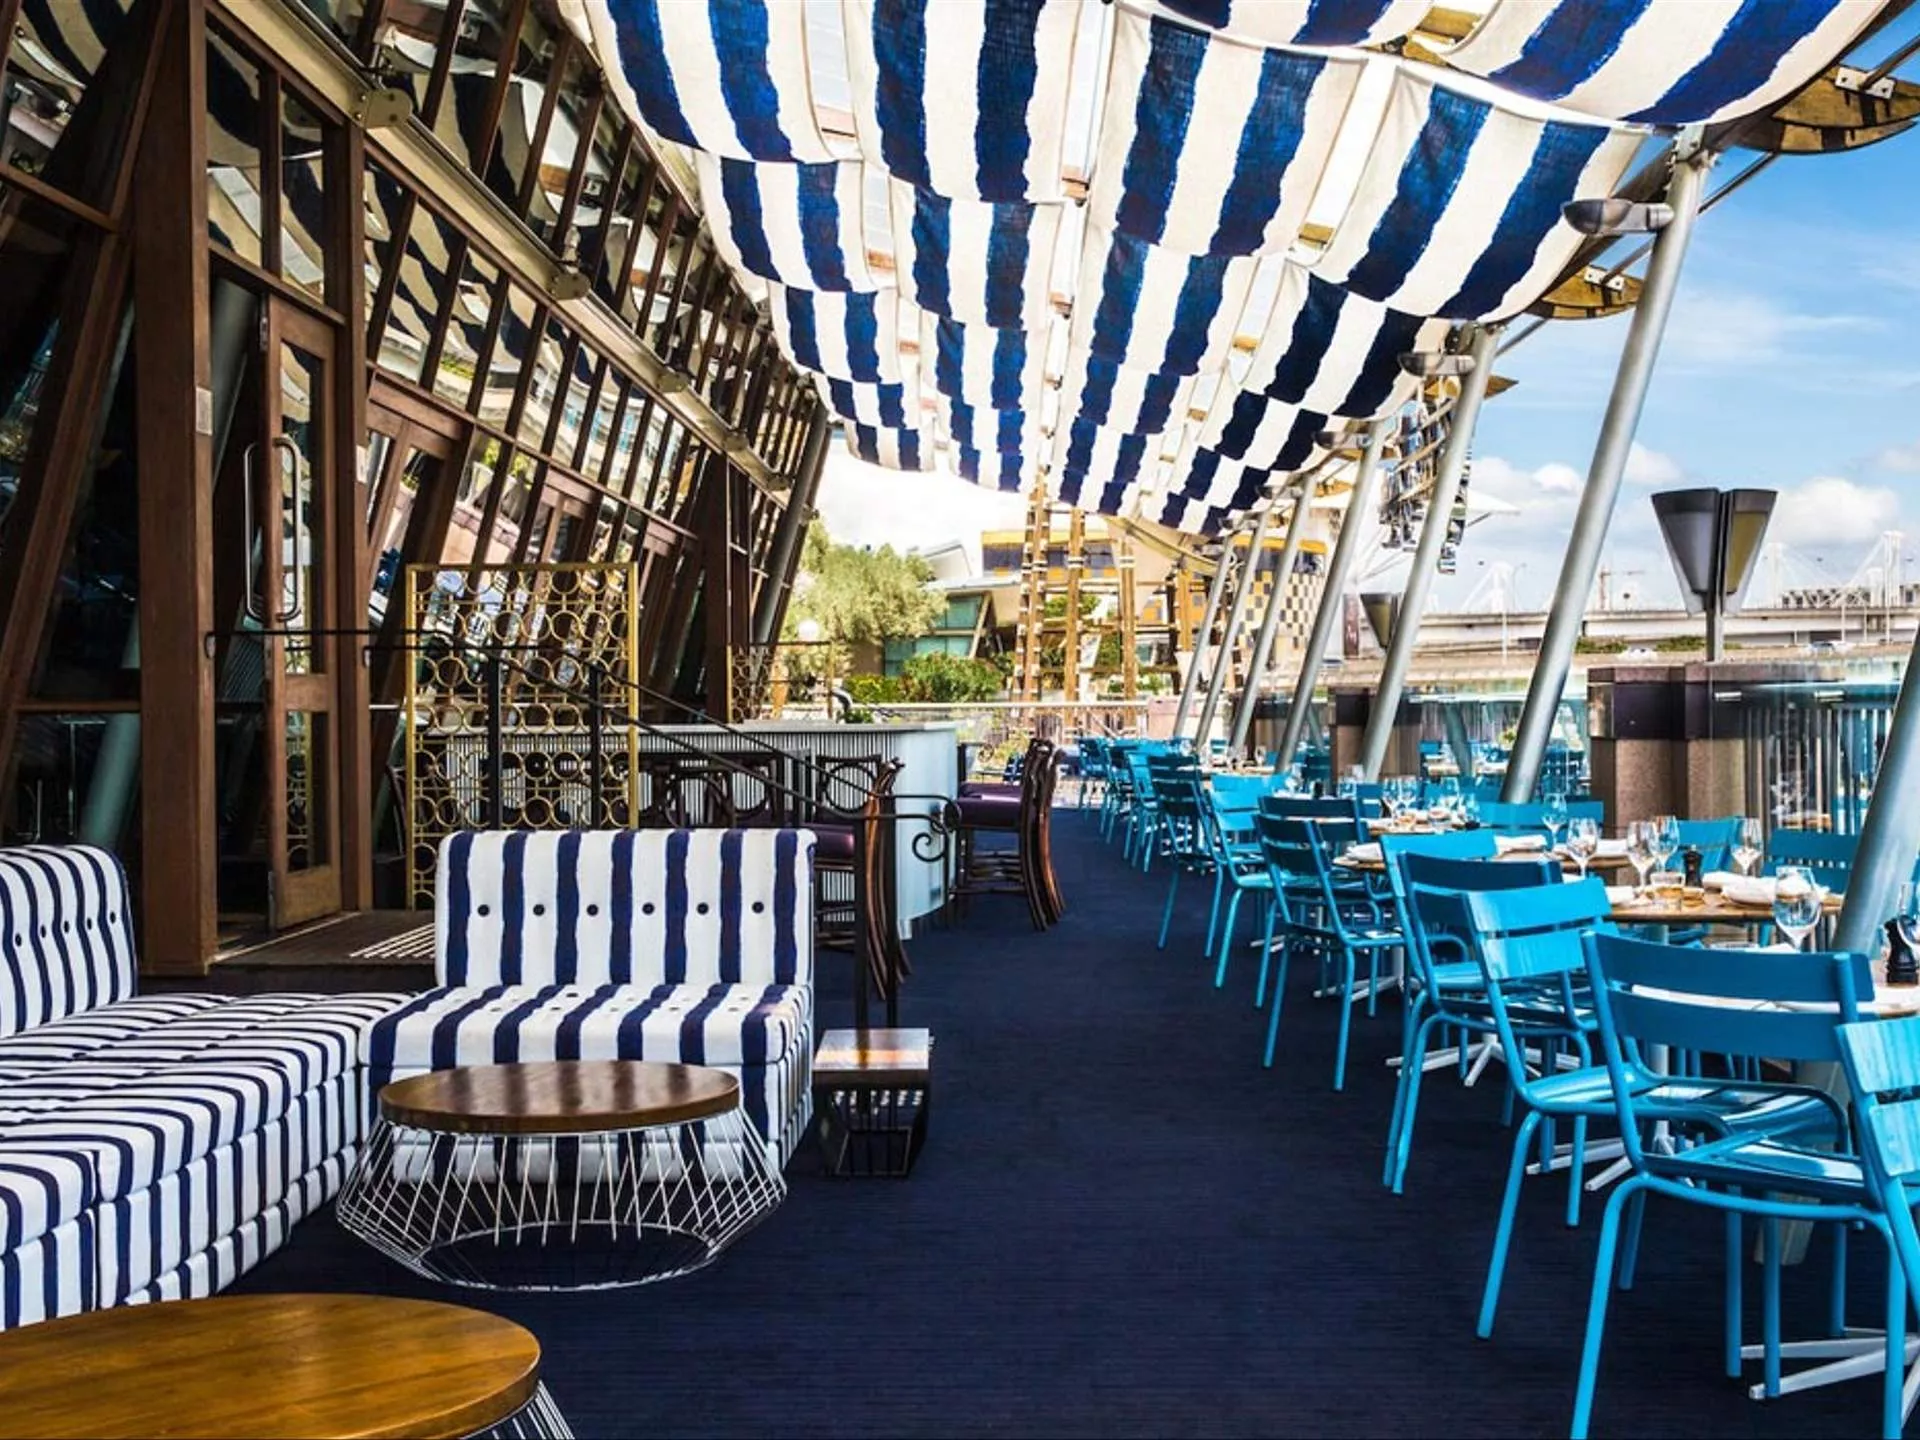 Cafe del Mar Sydney in Australia, Australia and Oceania | Observation Decks,Restaurants - Rated 3.3